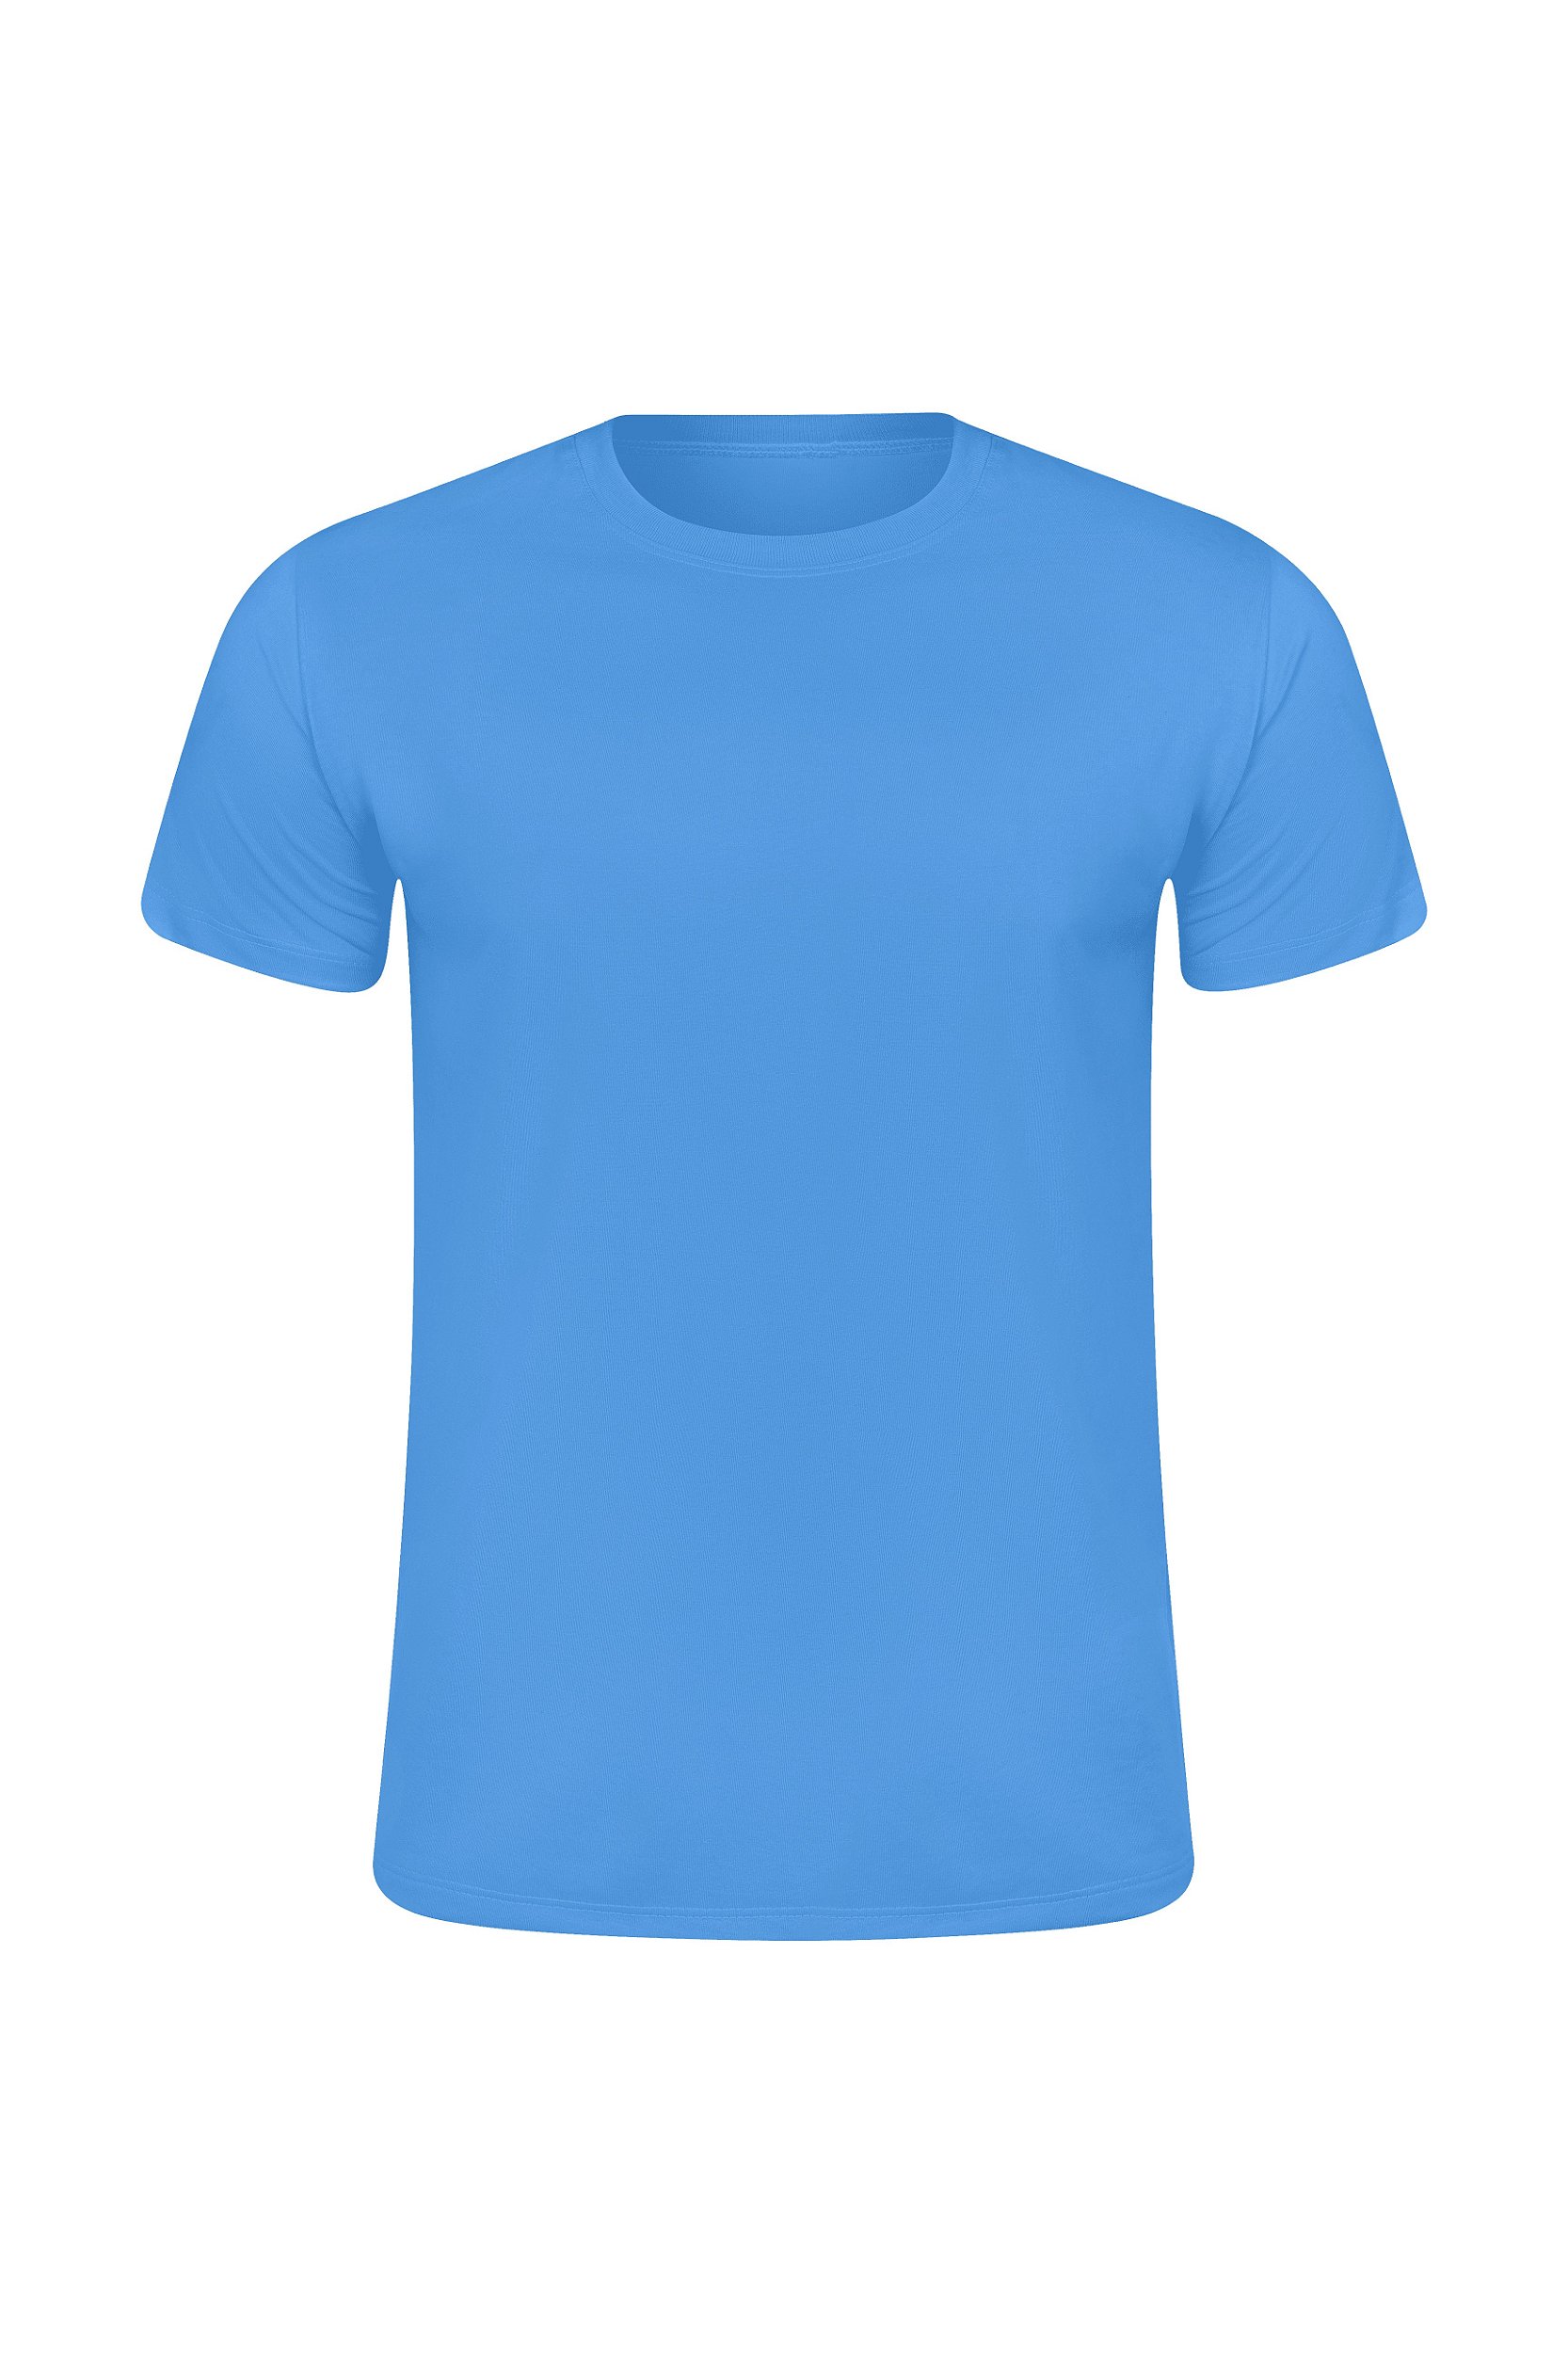 Camiseta Masculina Básica Gola Careca-Malha 100% Poliéster Fiado